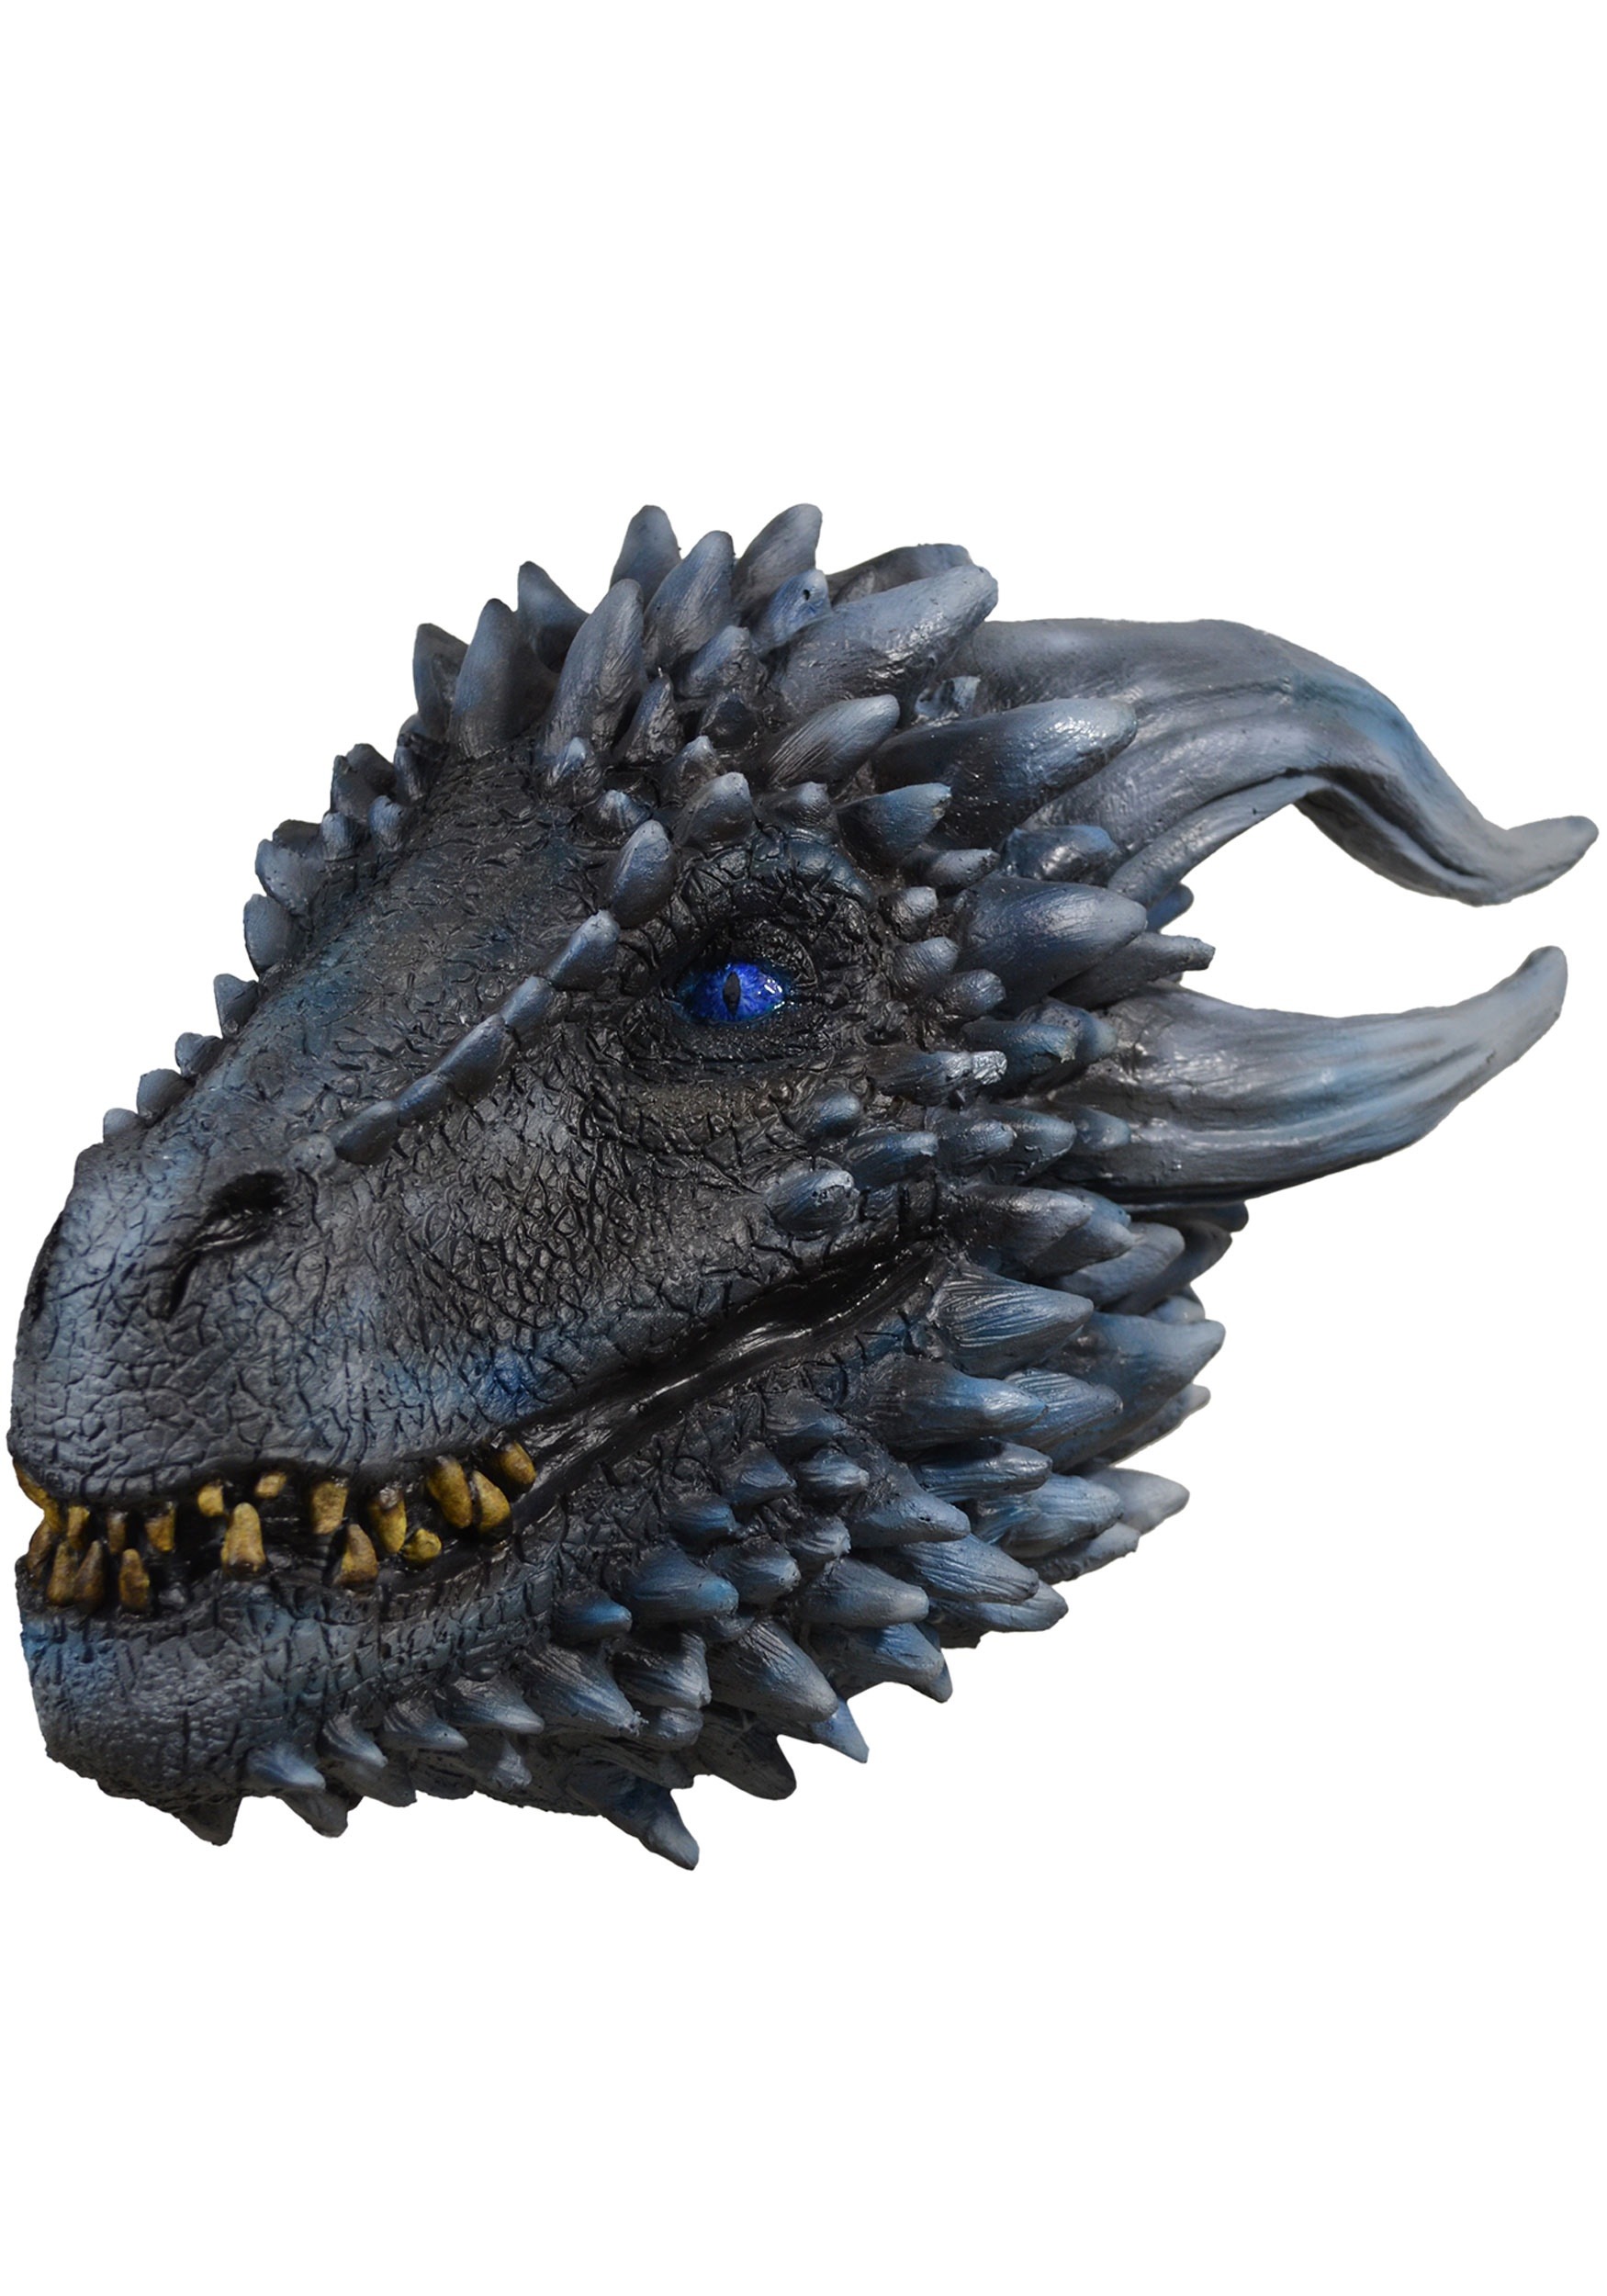 Targaryen Dragon Patch White Walker Blue Viserion Head 3 inch Round Patch 